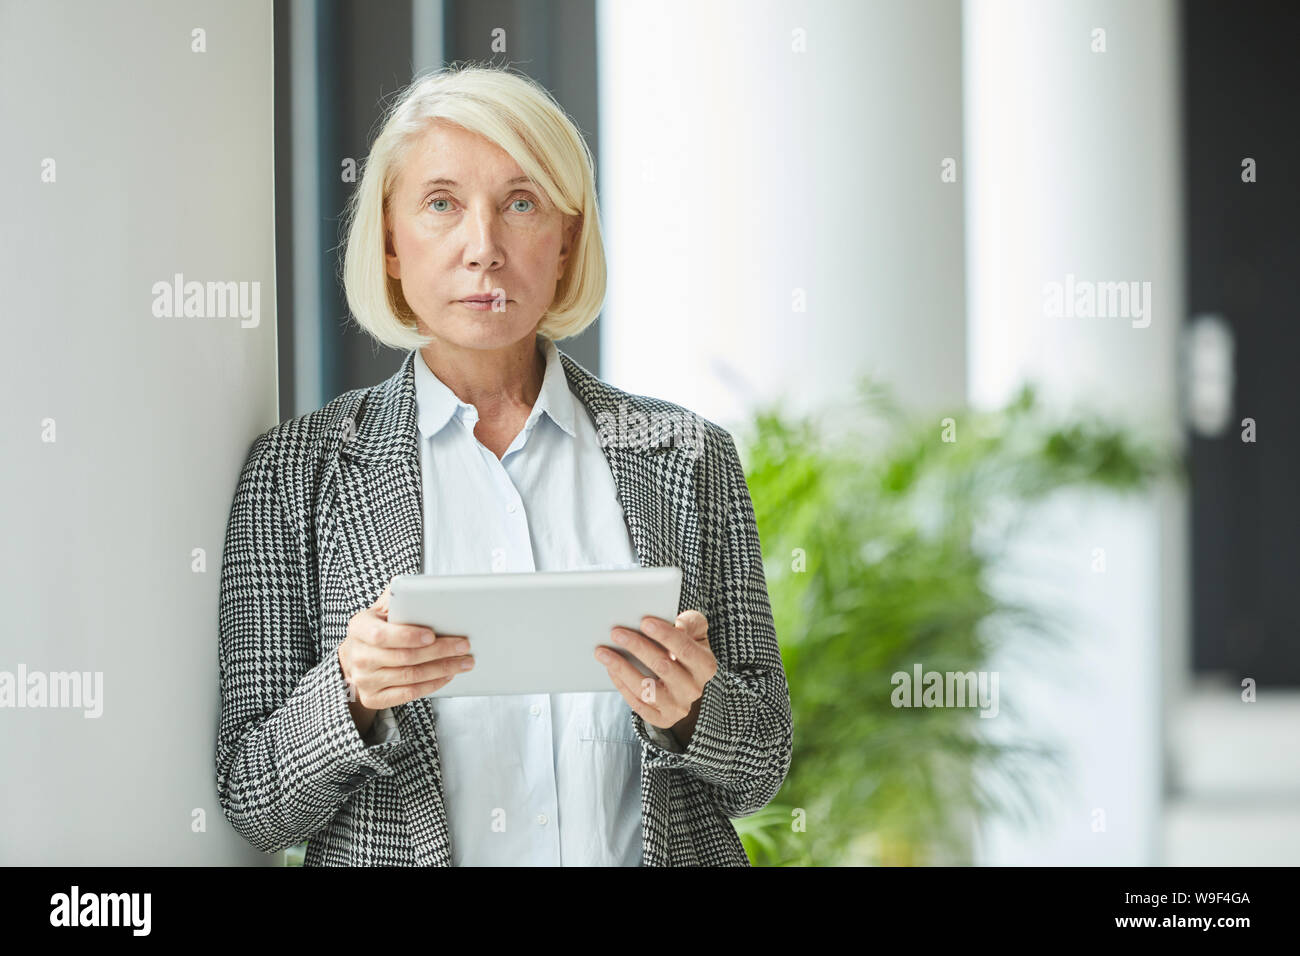 Portrait of serious mature businesswoman avec de courts cheveux blonds looking at camera while using digital tablet Banque D'Images